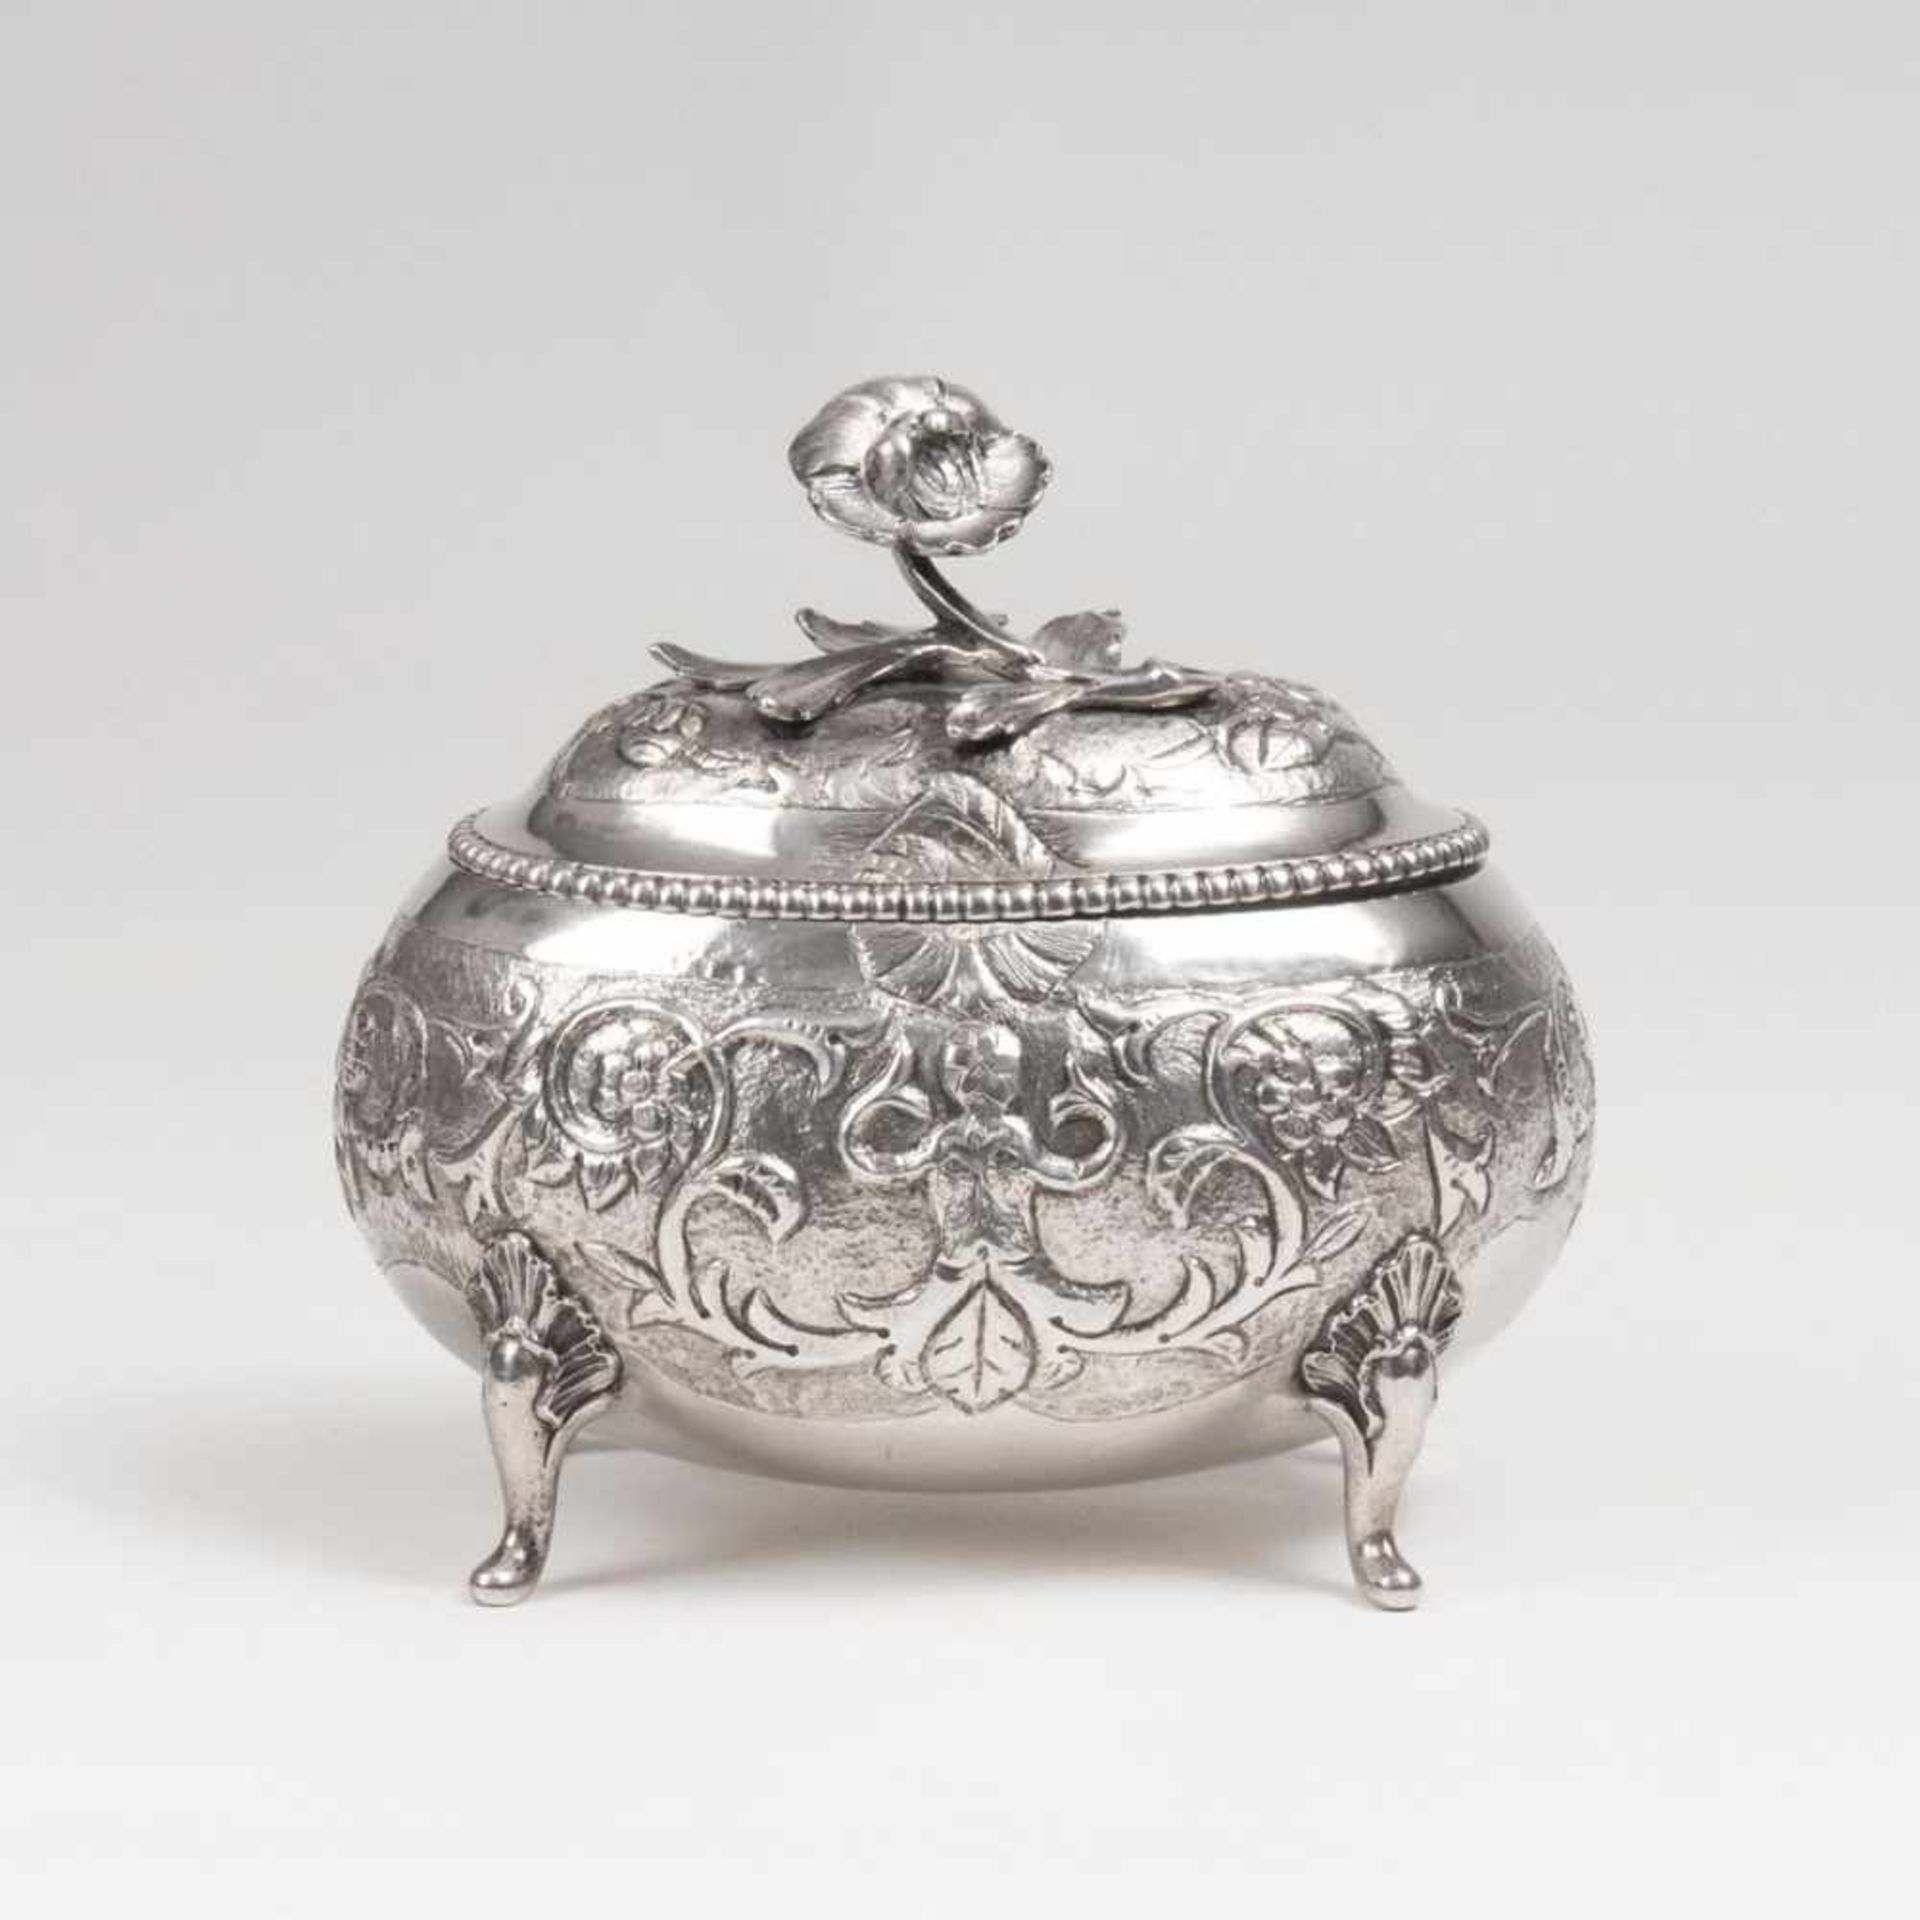 Hecker, Johann CarlMaker since 1784A Rococo Sugar Bowl with floral knobGdansk, late 18. cent.